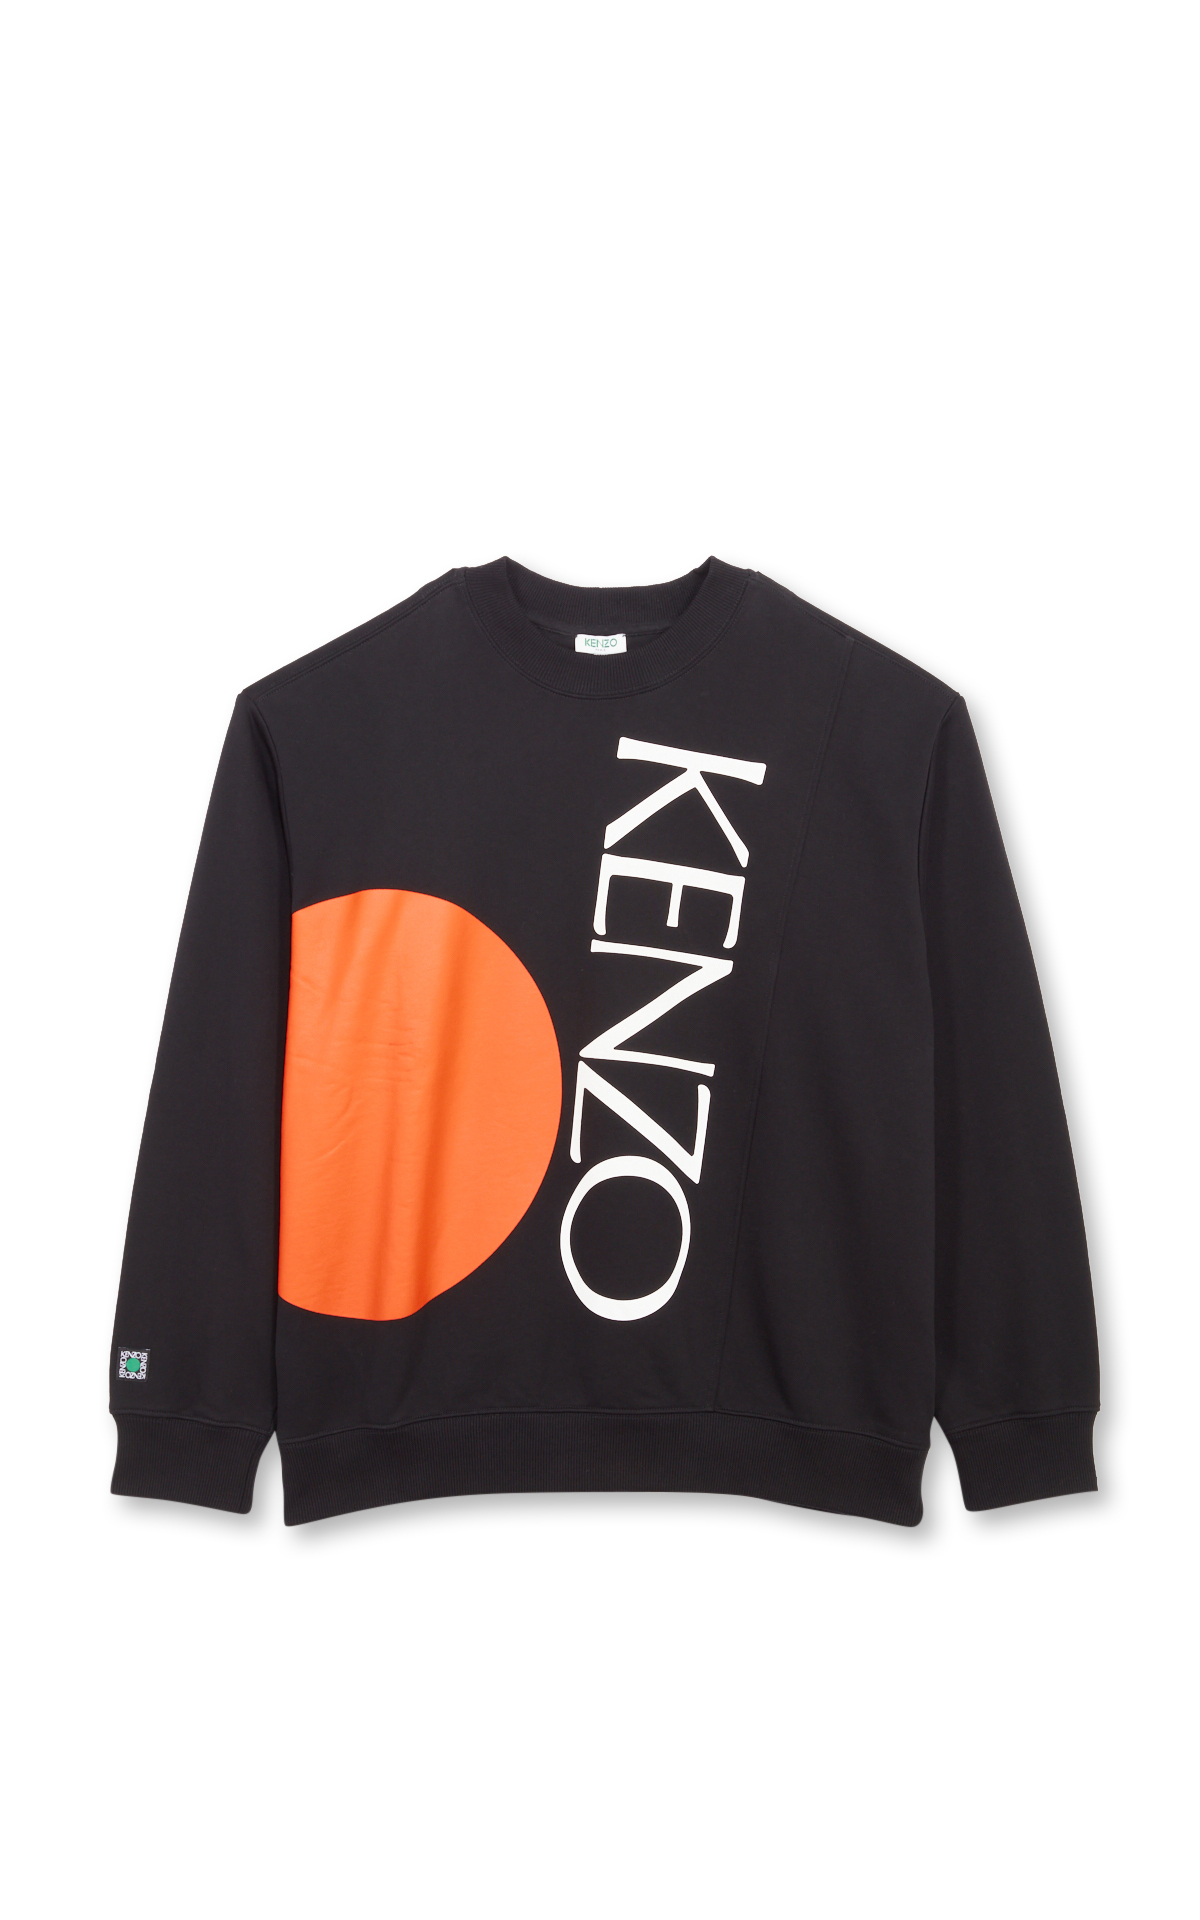 black and orange kenzo shirt